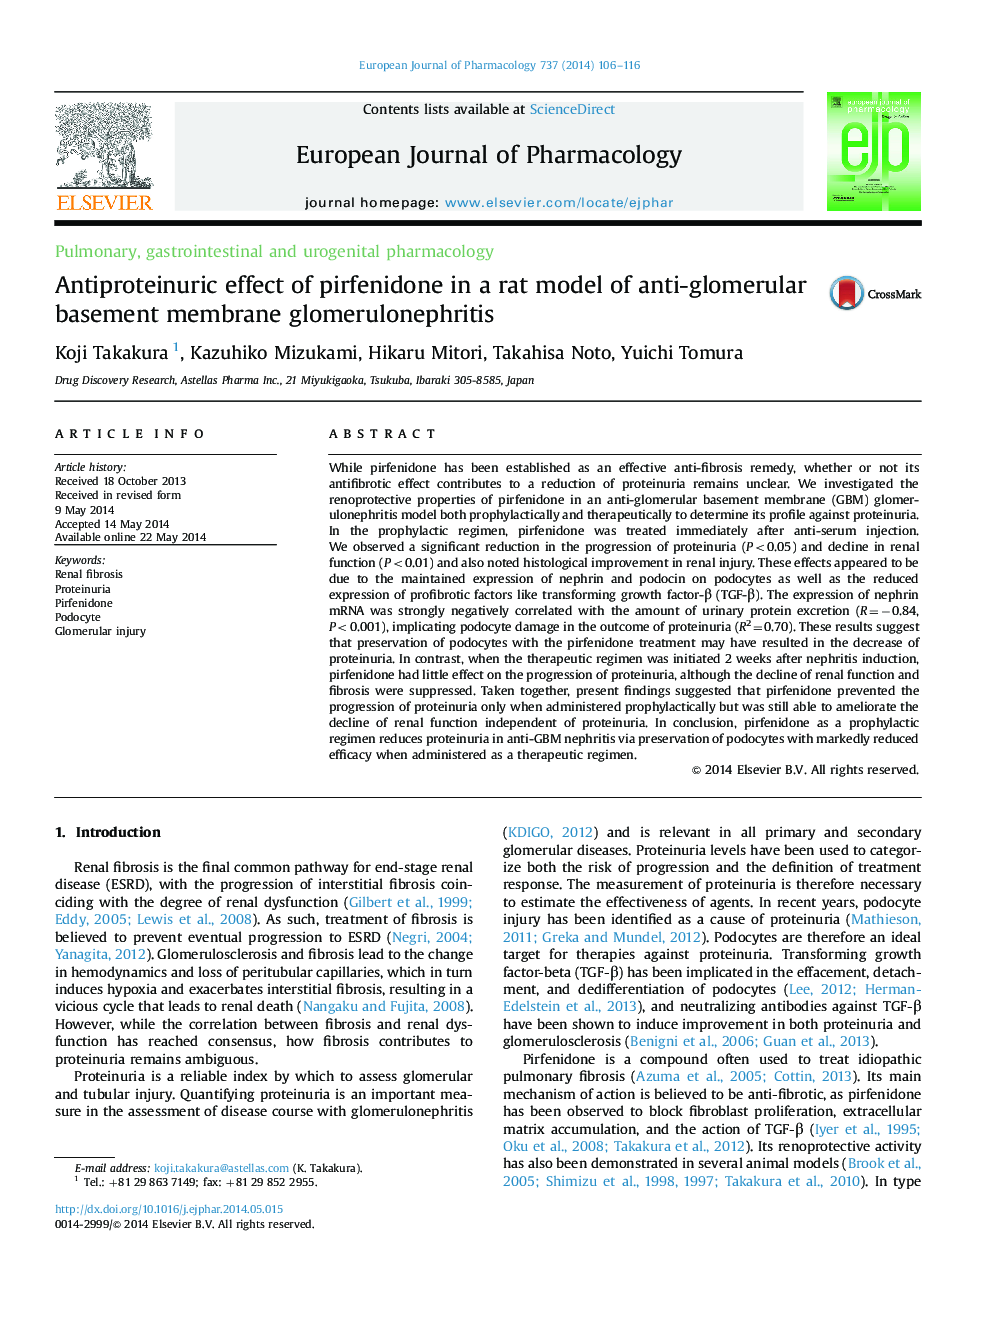 Antiproteinuric effect of pirfenidone in a rat model of anti-glomerular basement membrane glomerulonephritis